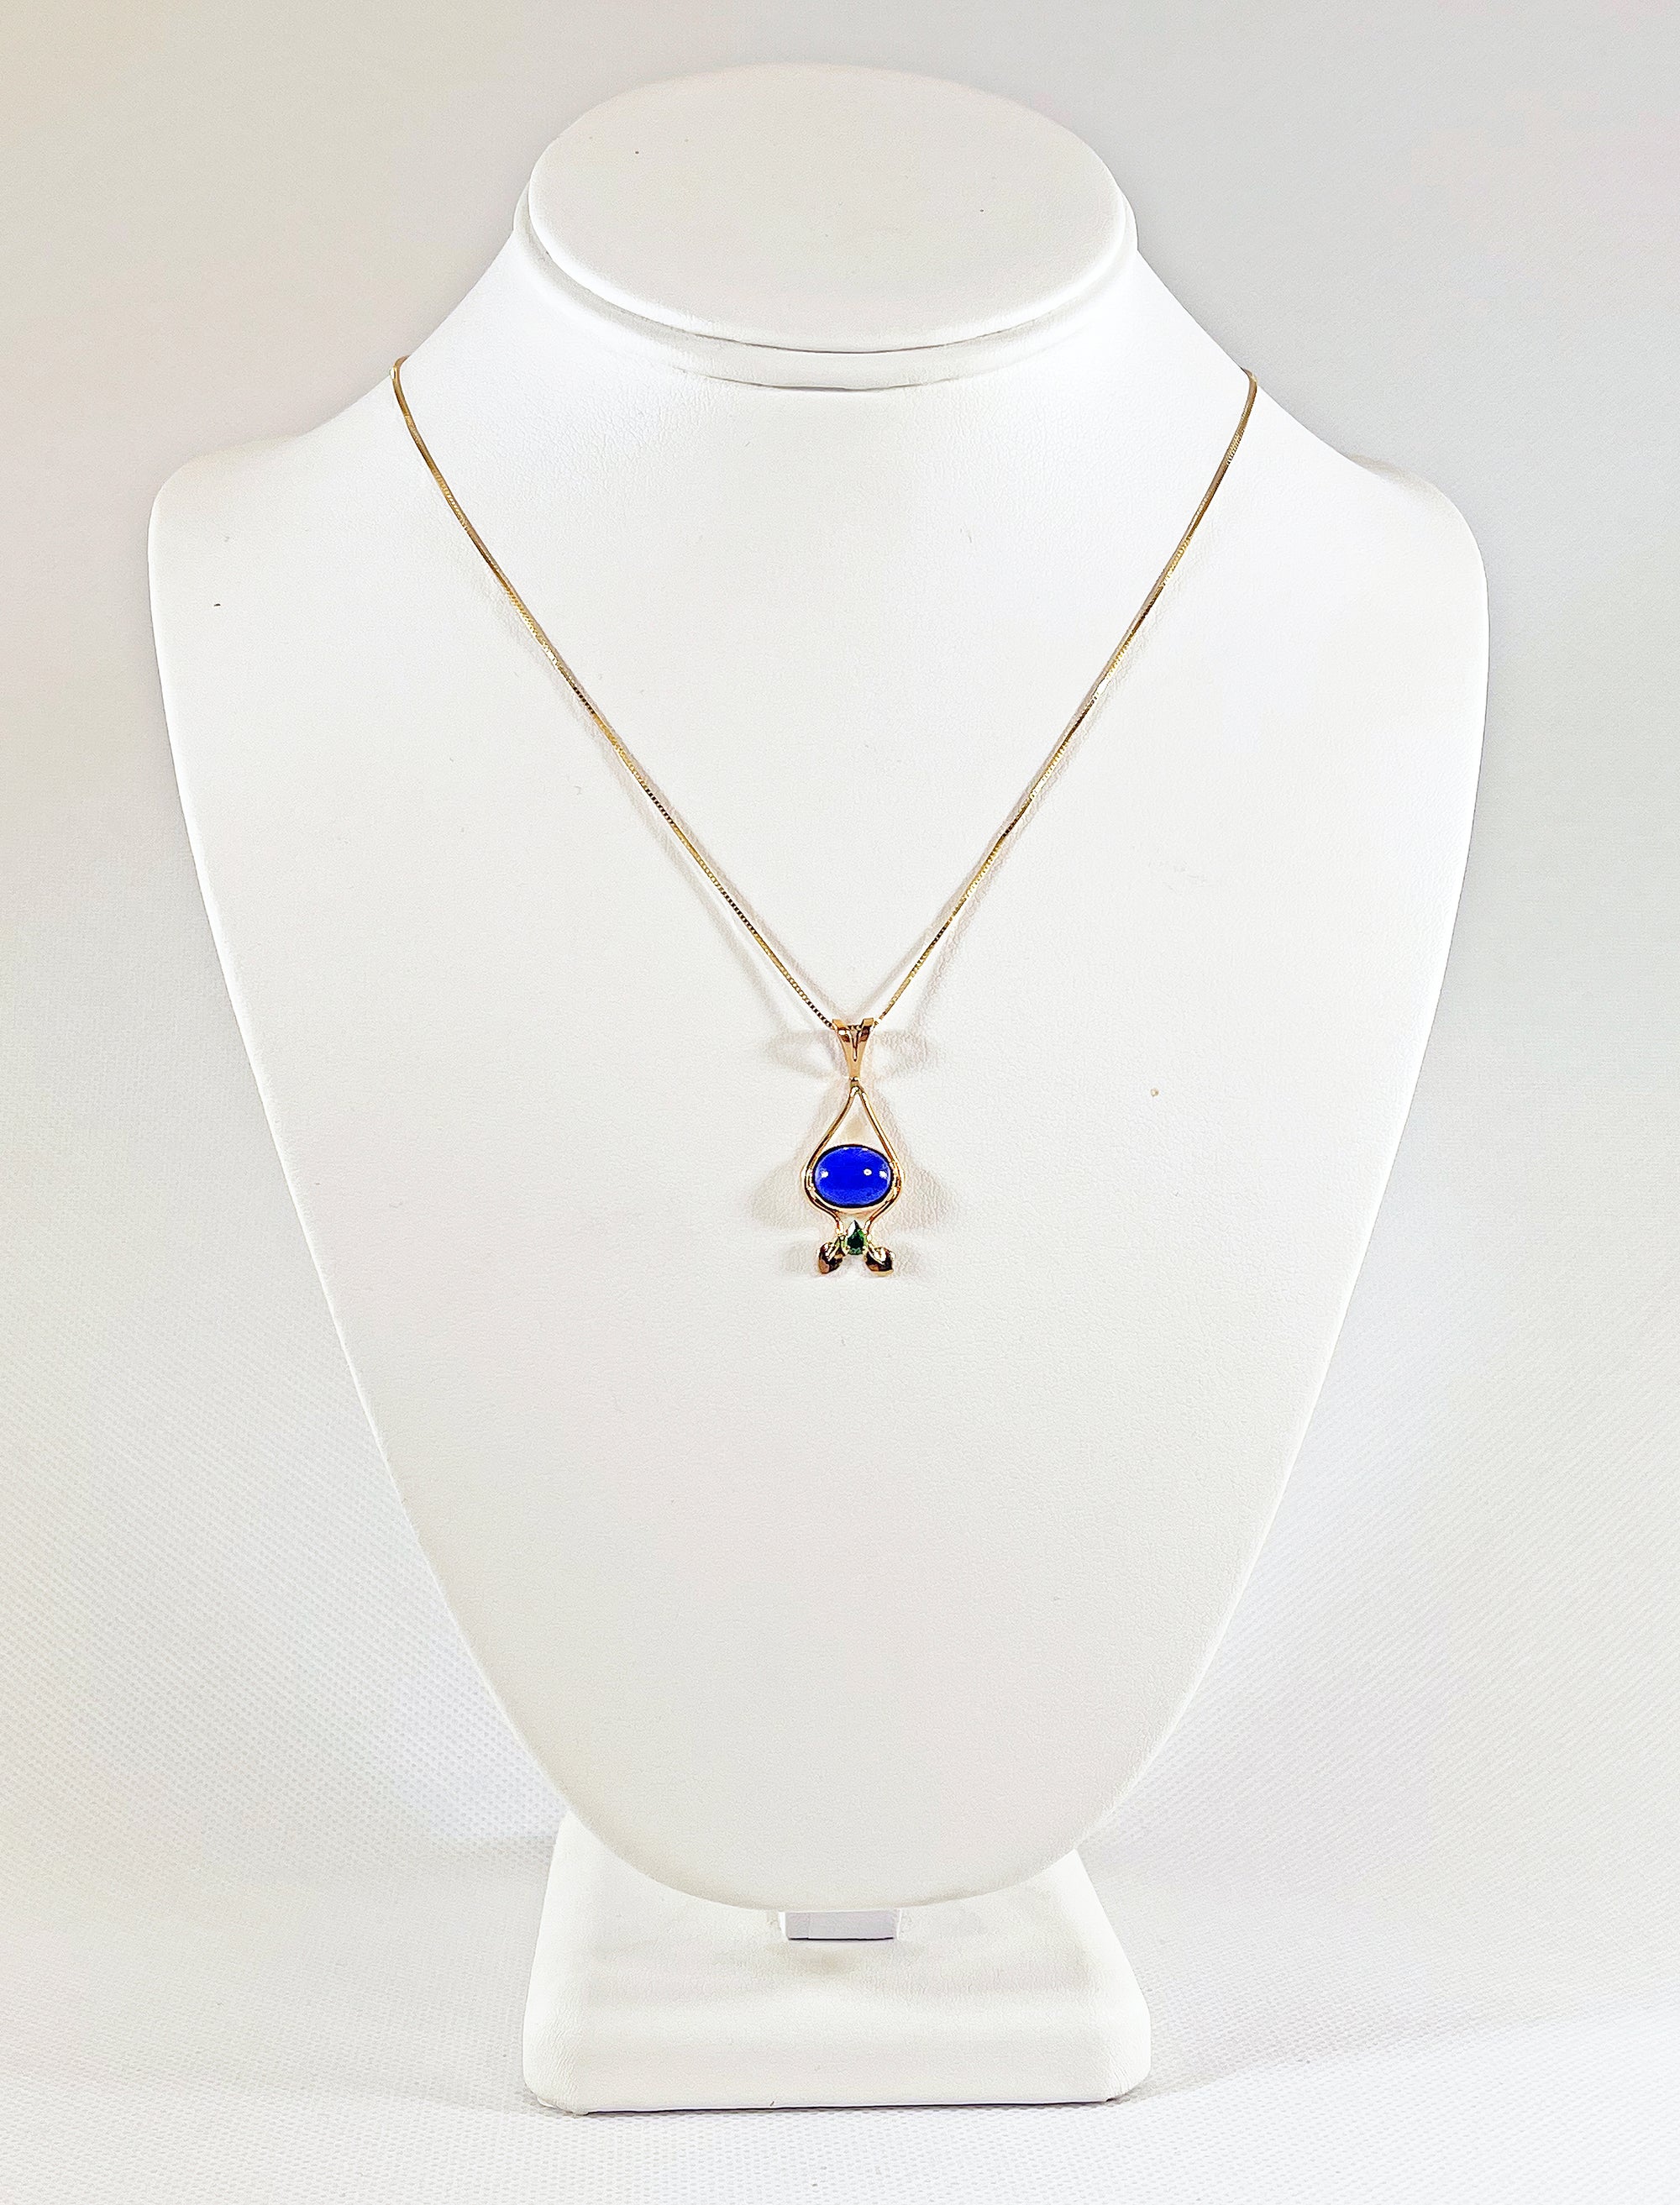 Cole Sheckler Necklace - Lapis Lazuli with Tsavorite Garnet